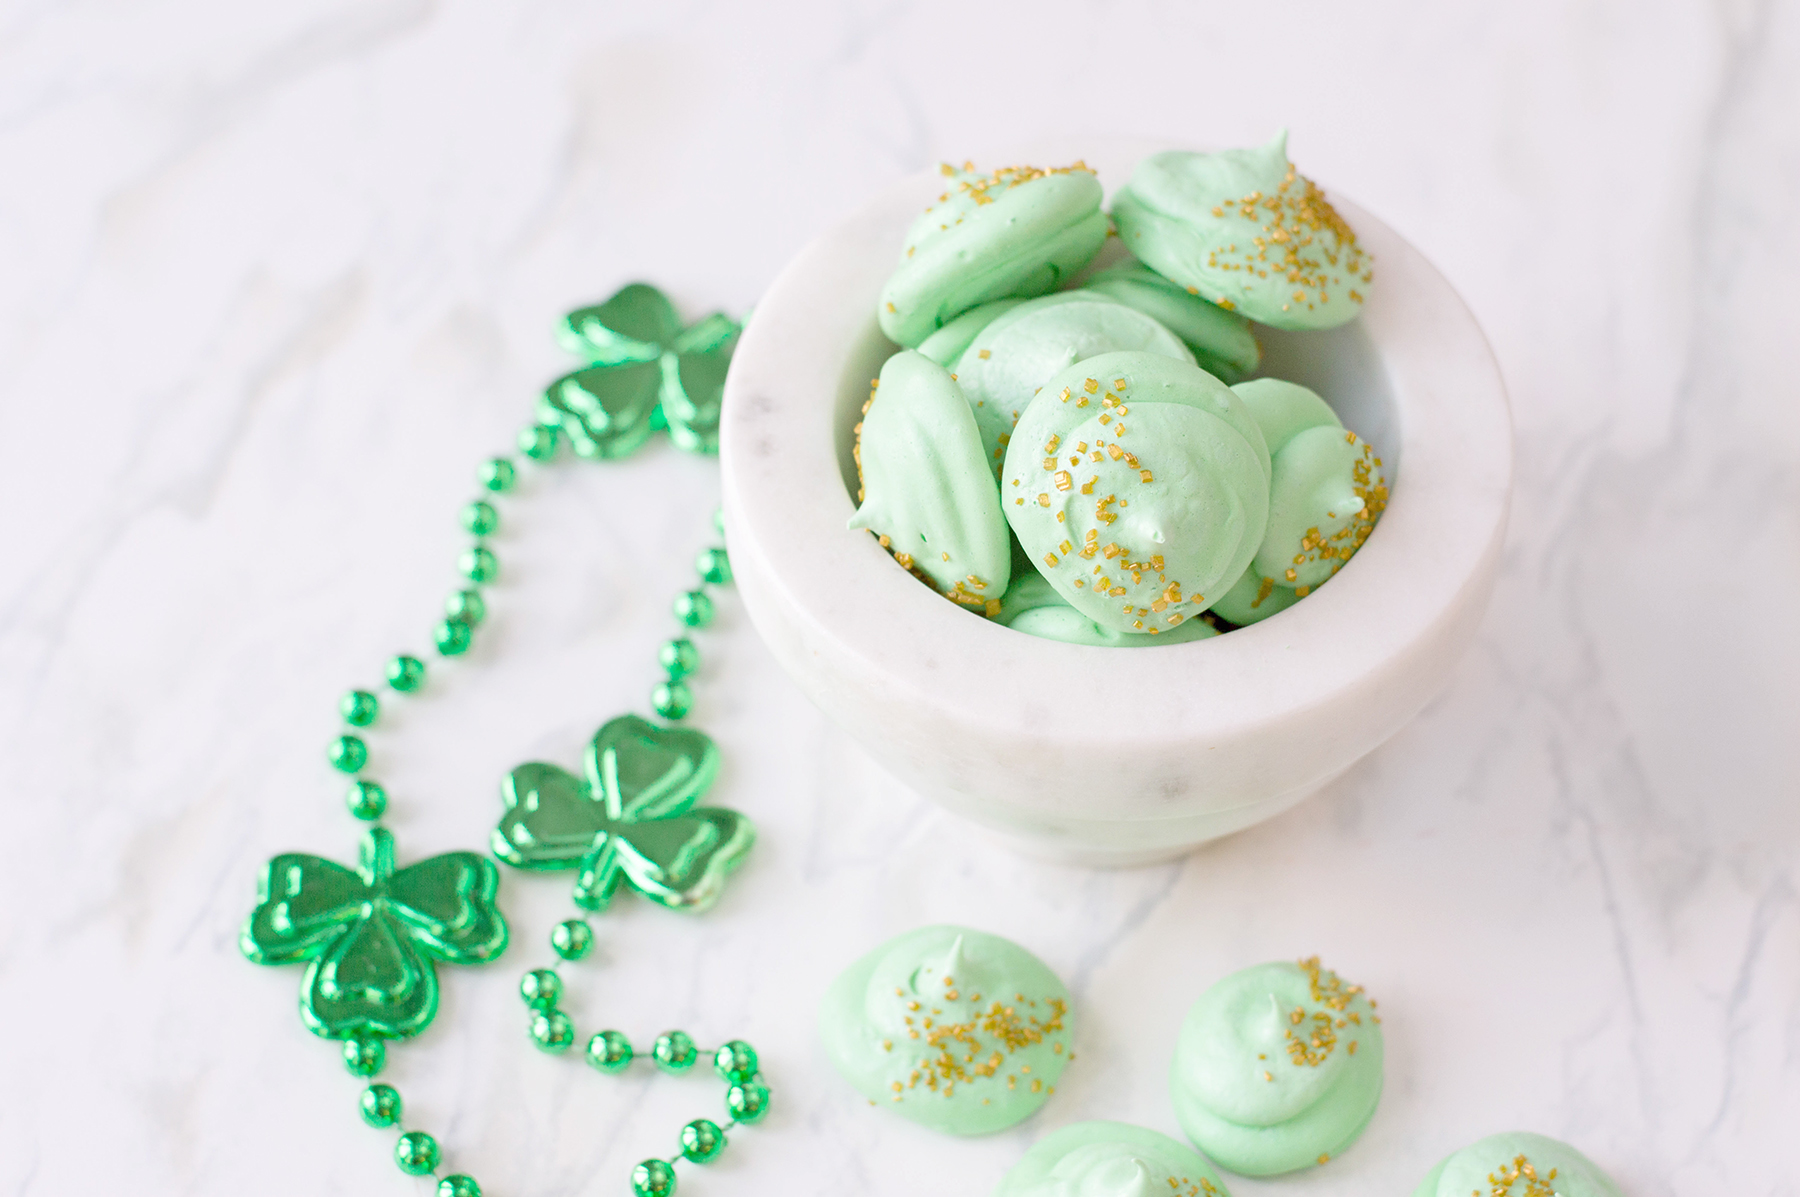 Lucky St. Patrick's Day Meringue Cookies